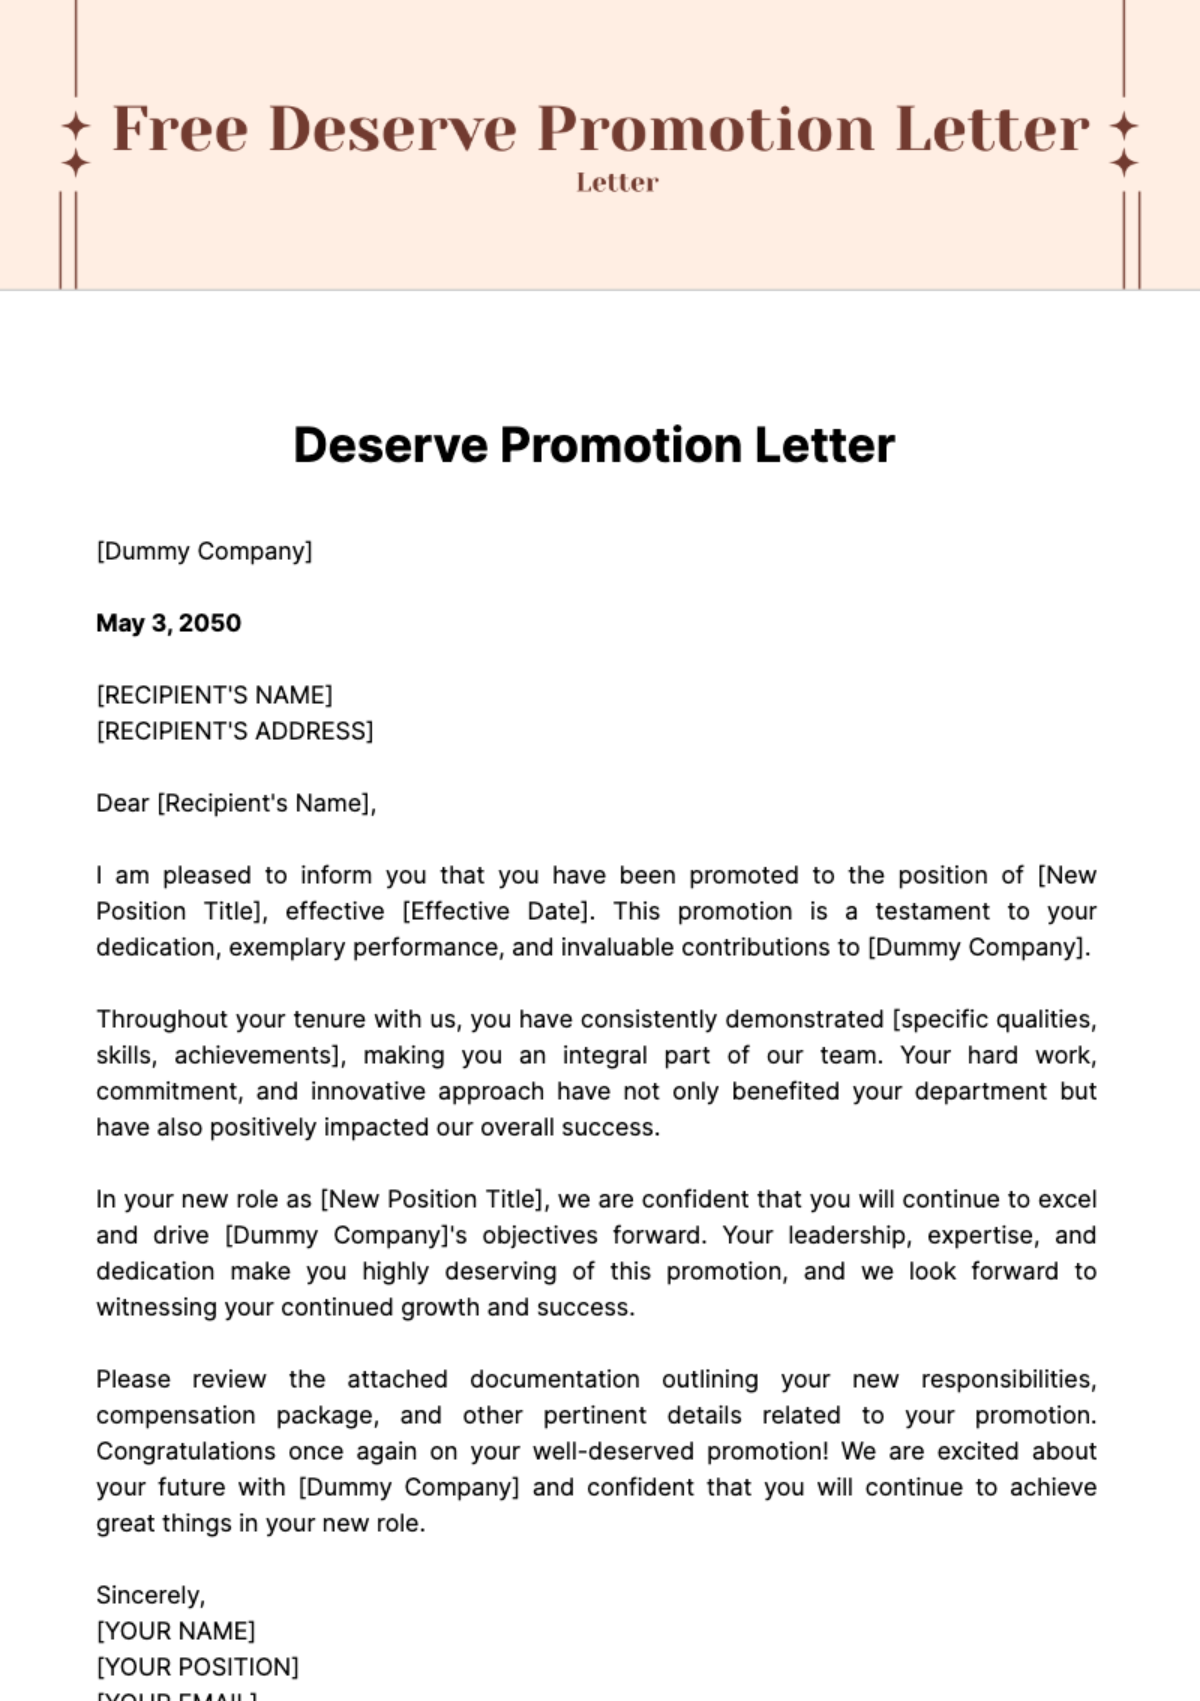 Free Deserve Promotion Letter Template